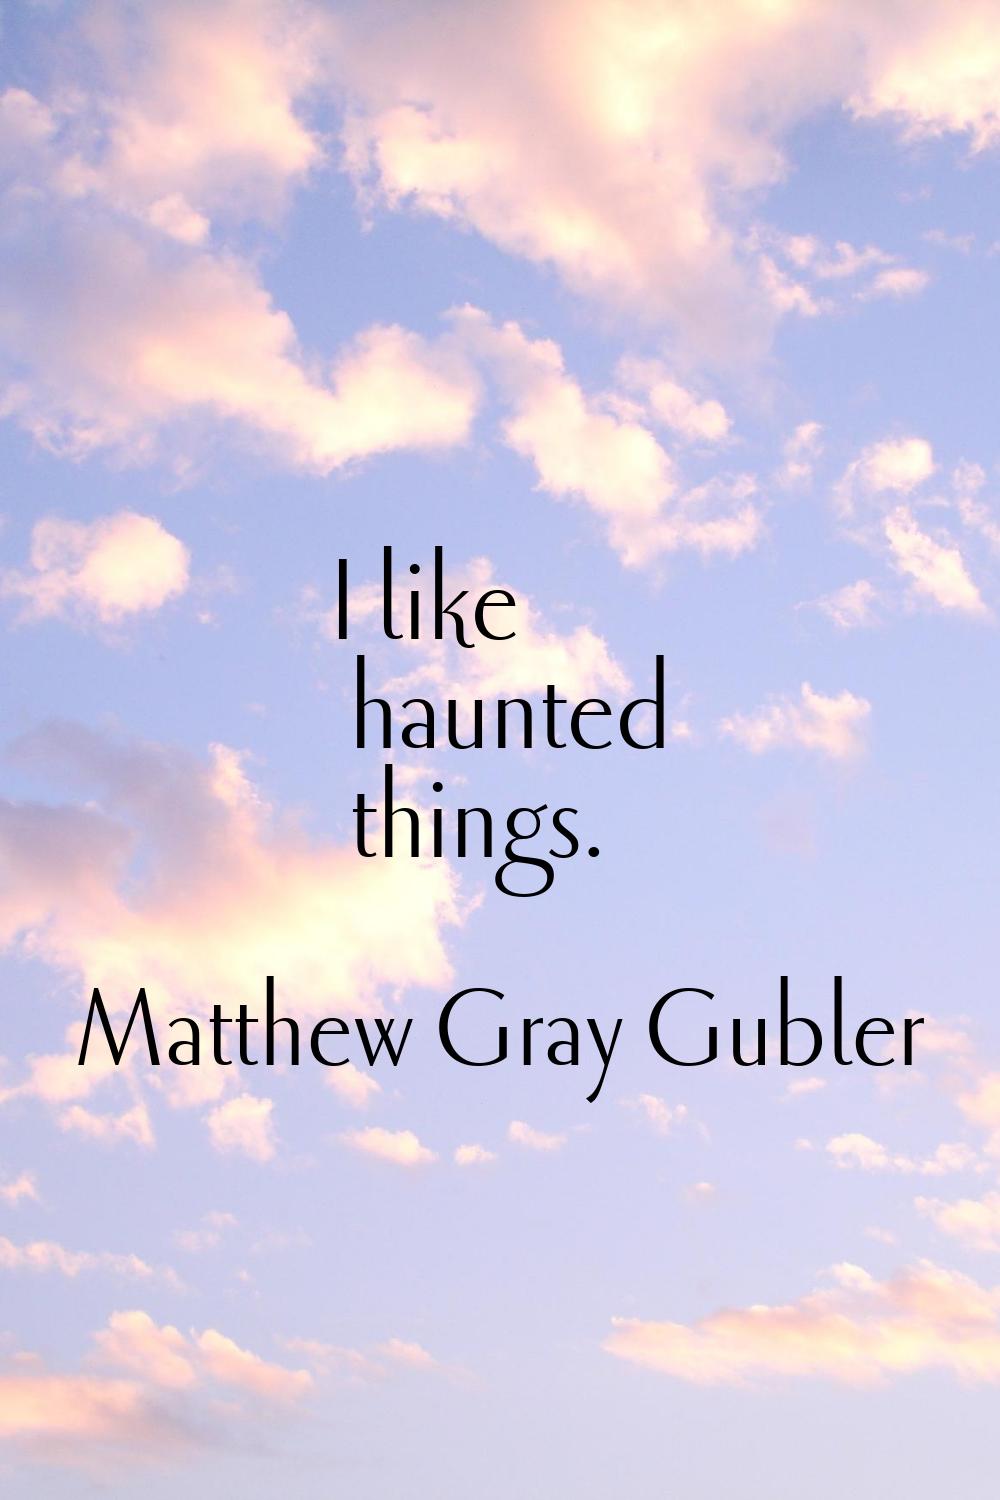 I like haunted things.